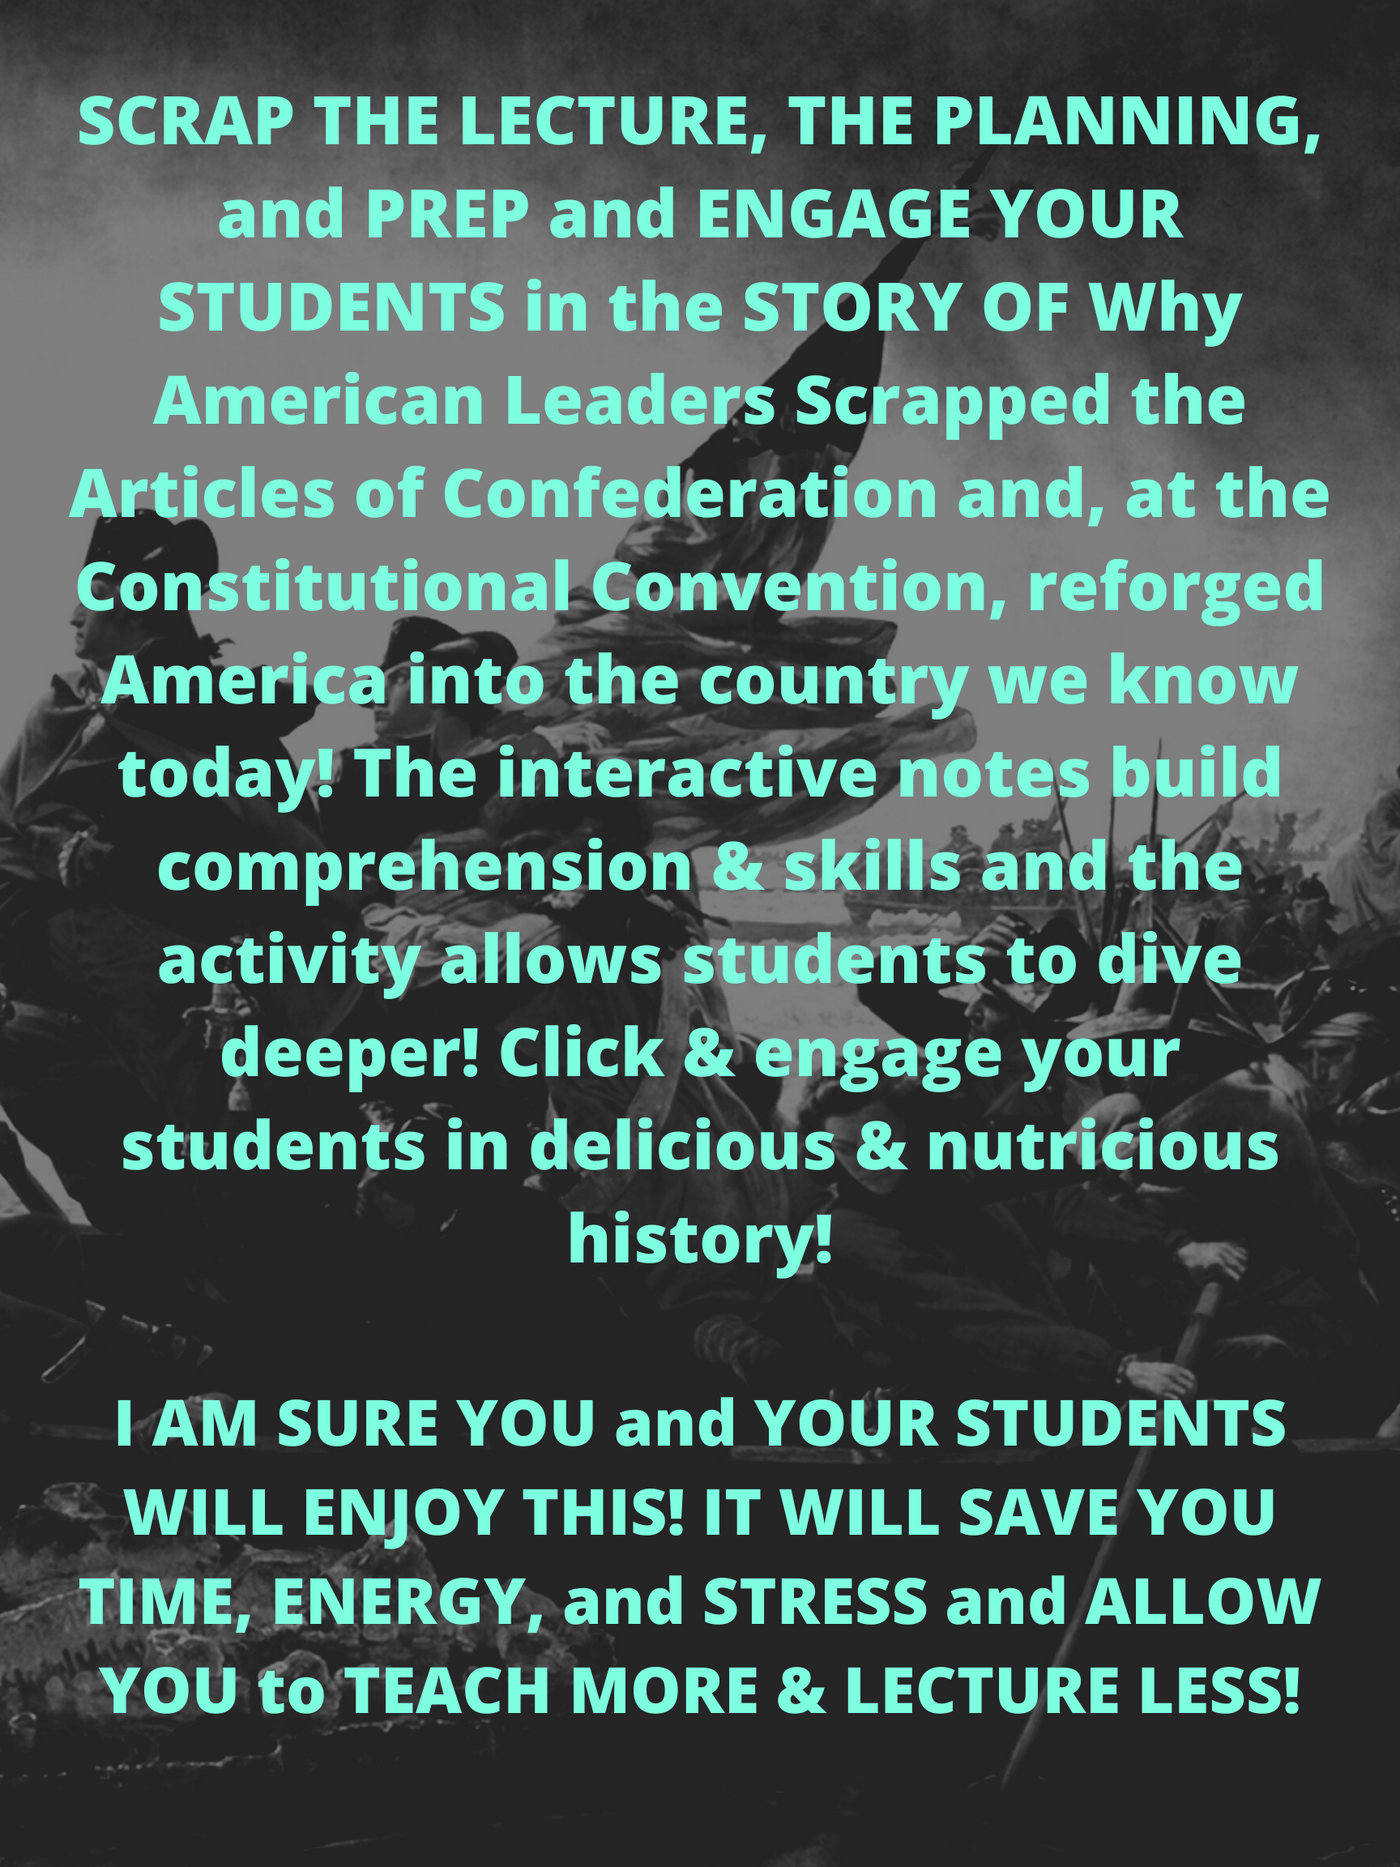 US History video curriculum